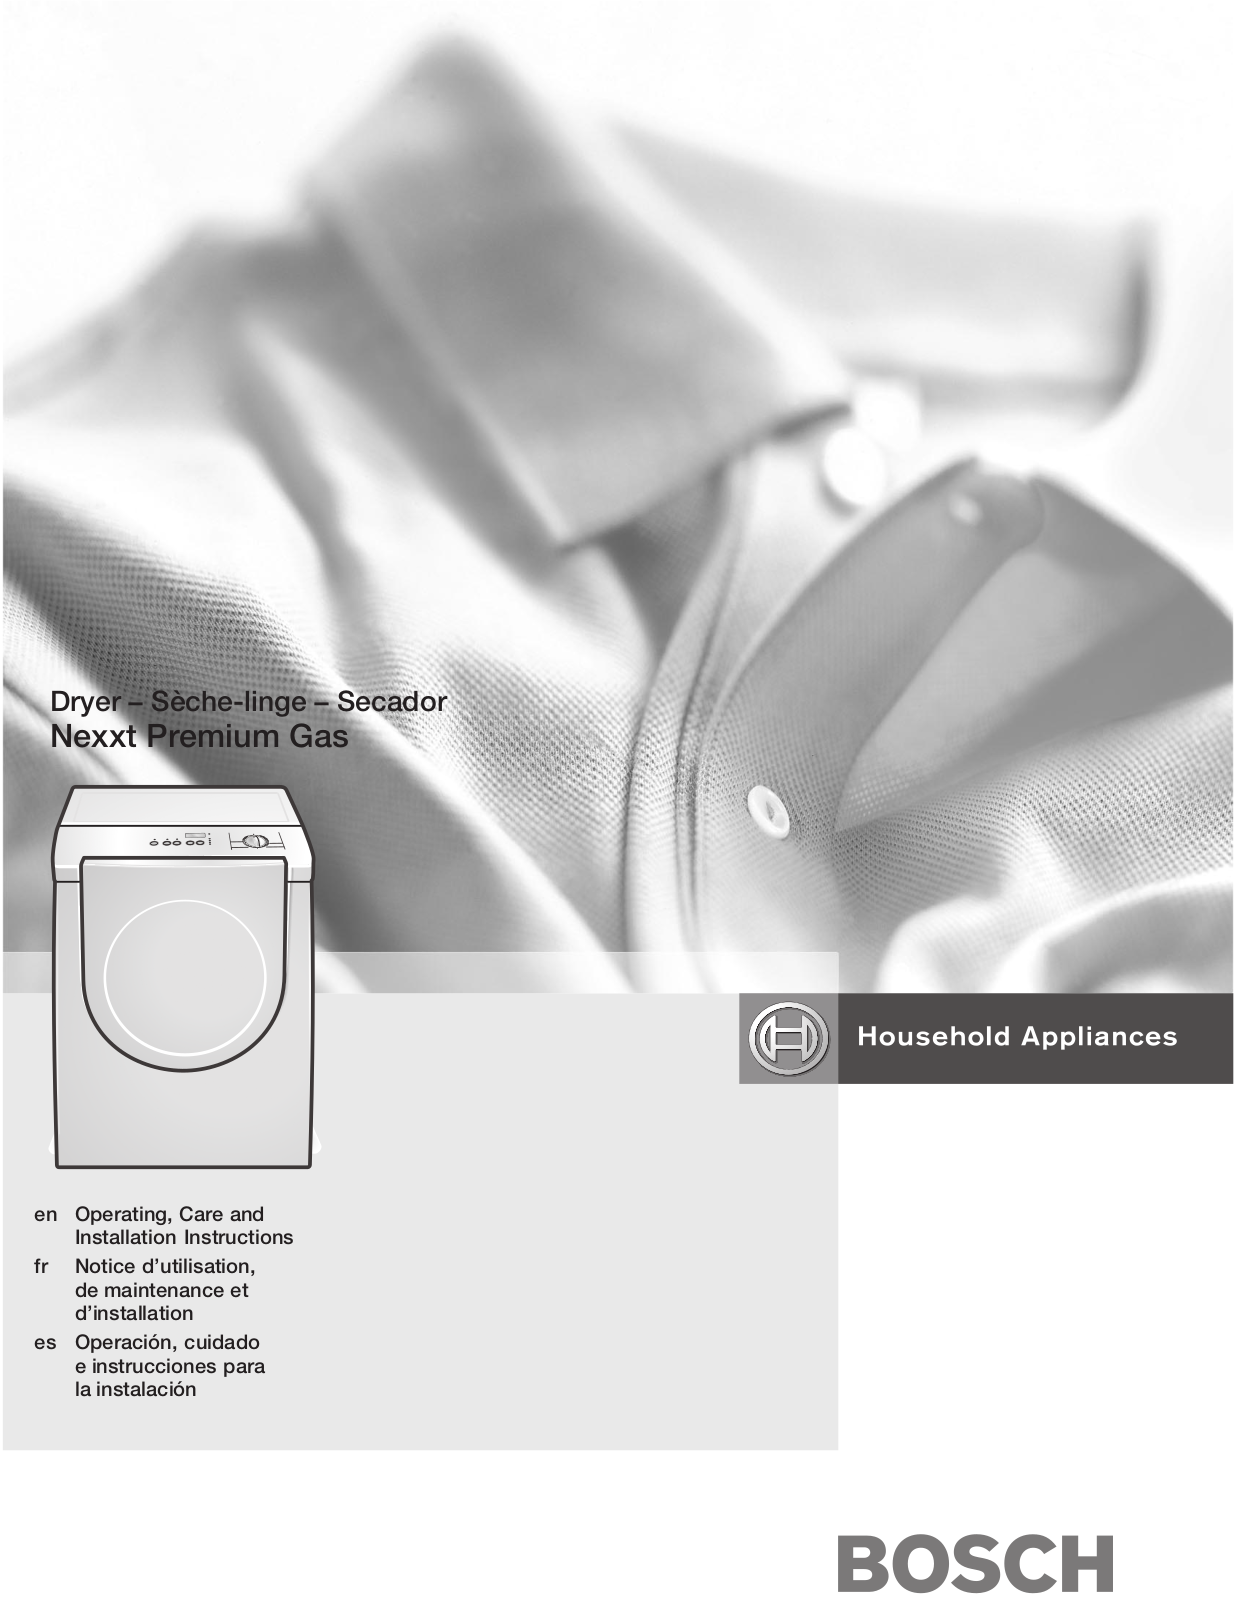 Bosch Appliances Dryer User Manual